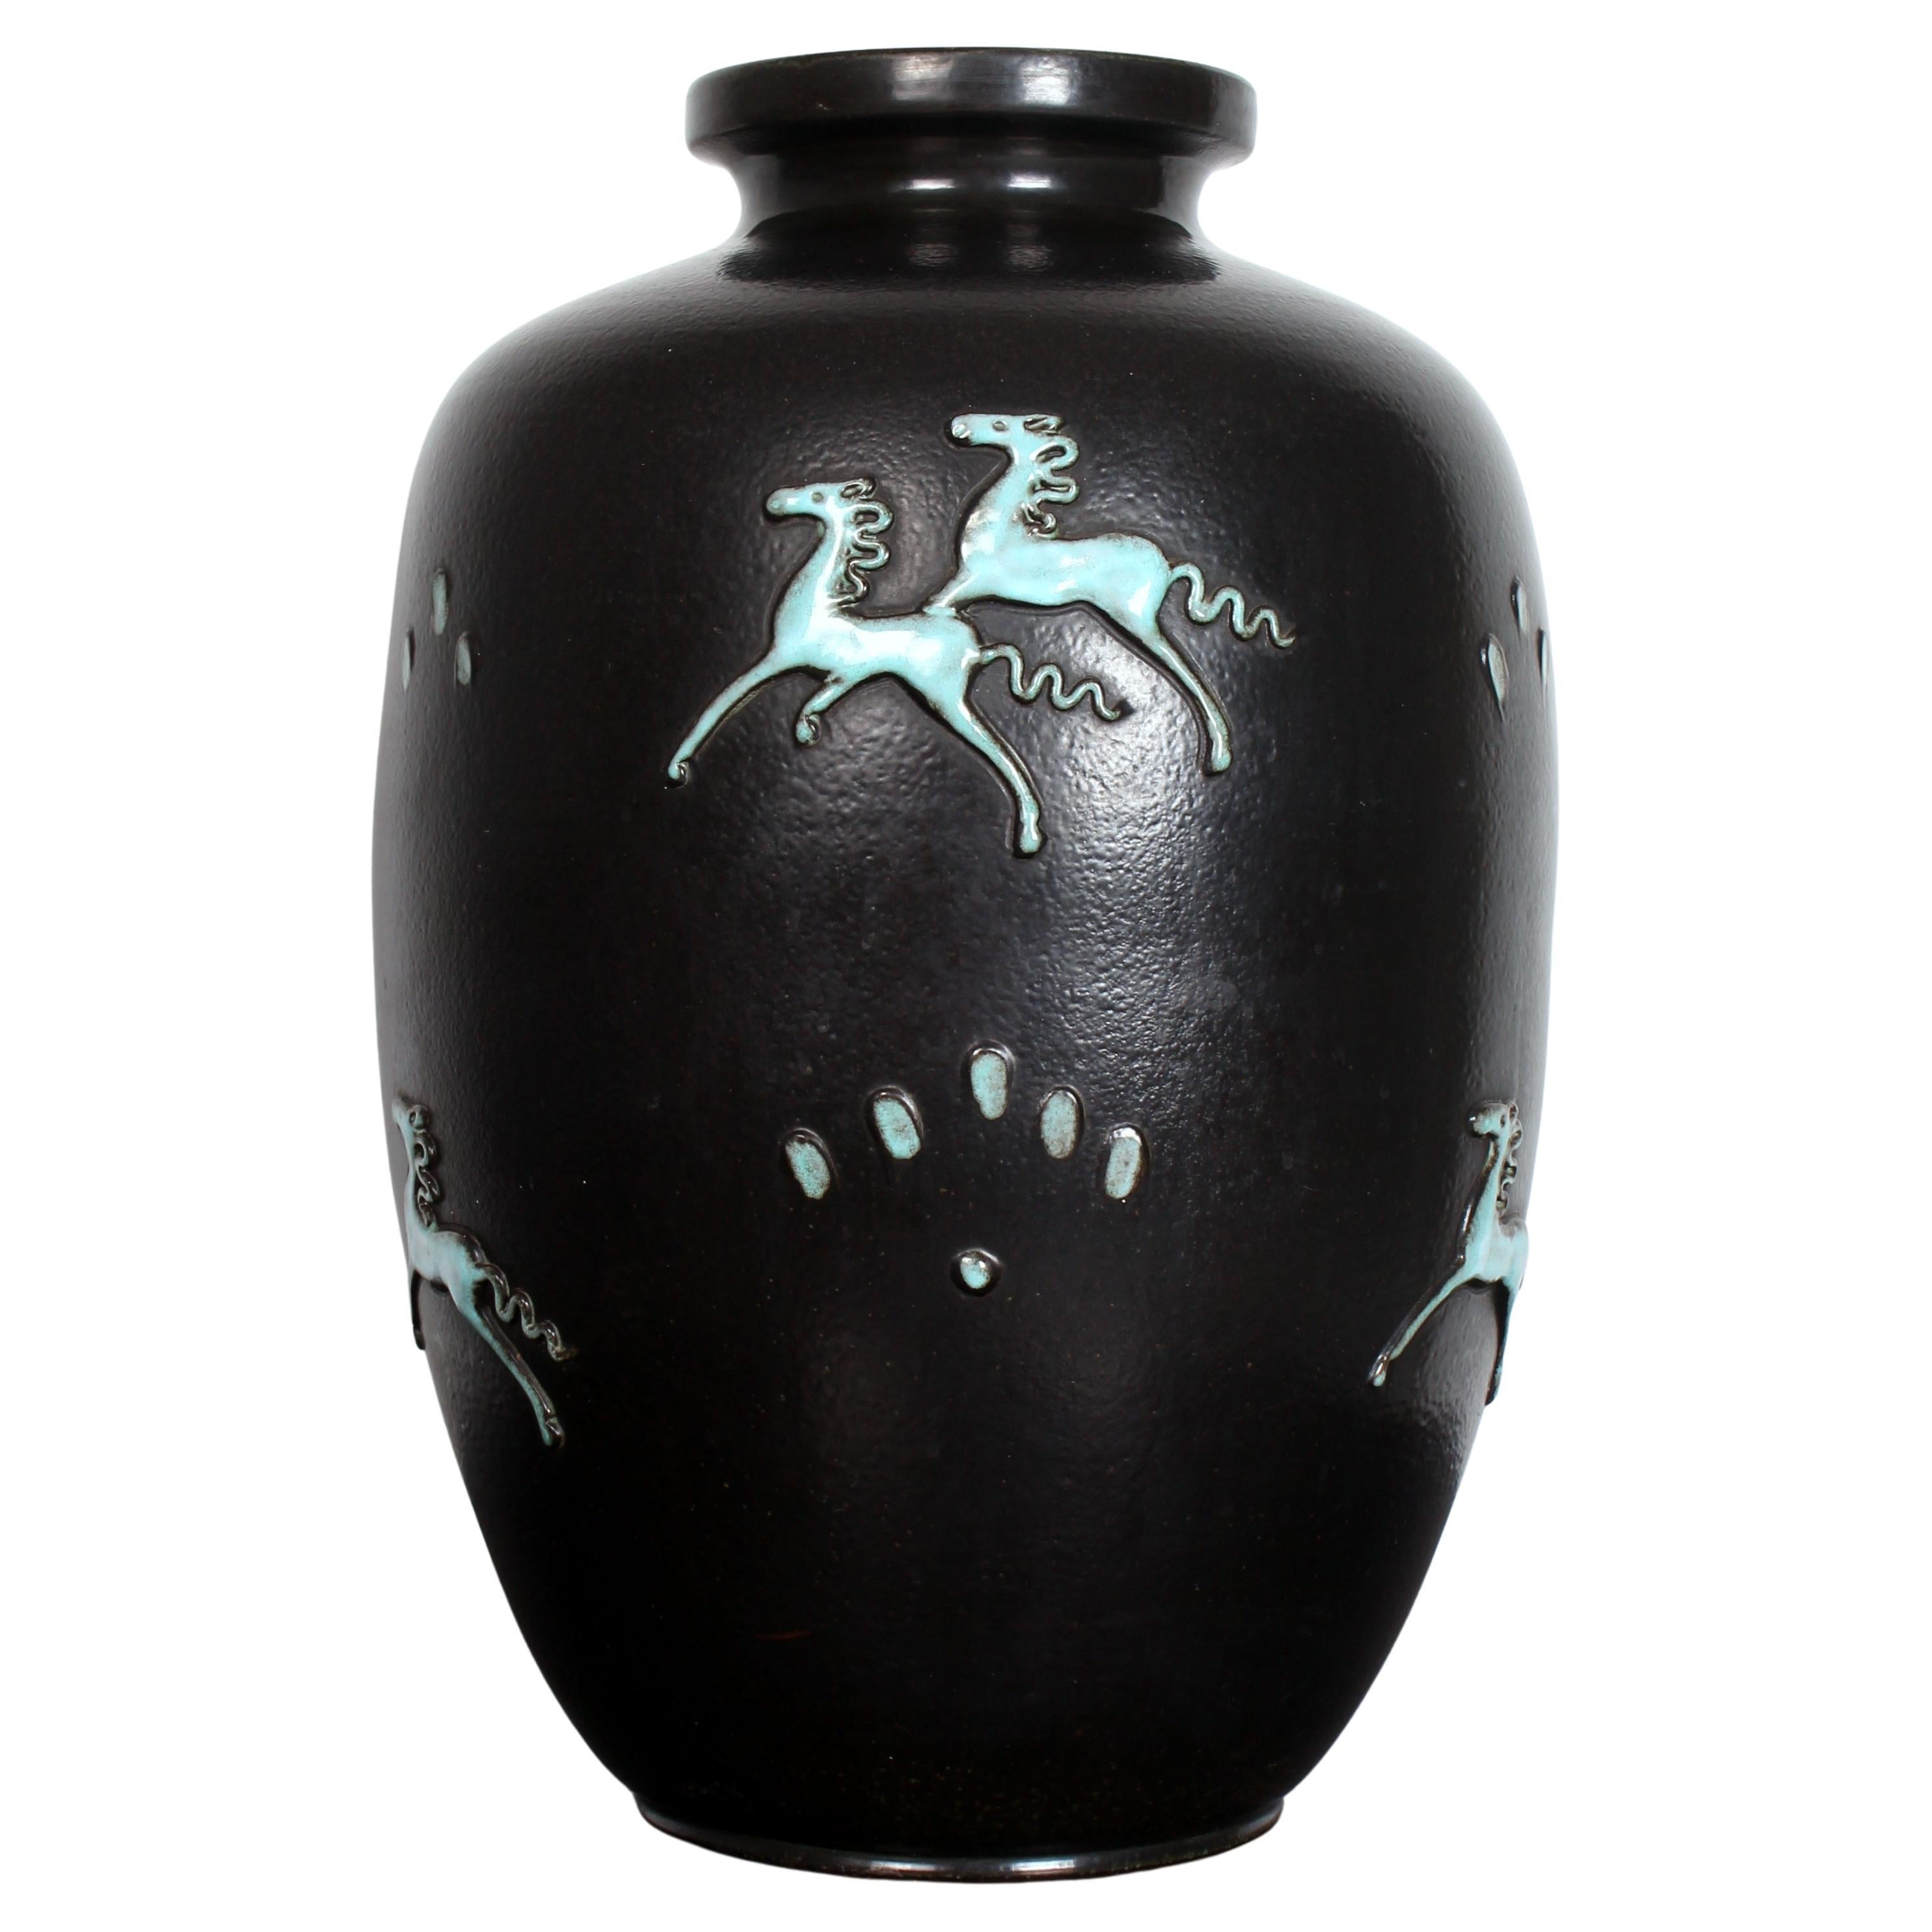 Vase de sol Art déco attr. à Michael Powolny / Wiener Keramik / Schleiss Keramik Gmunden 
